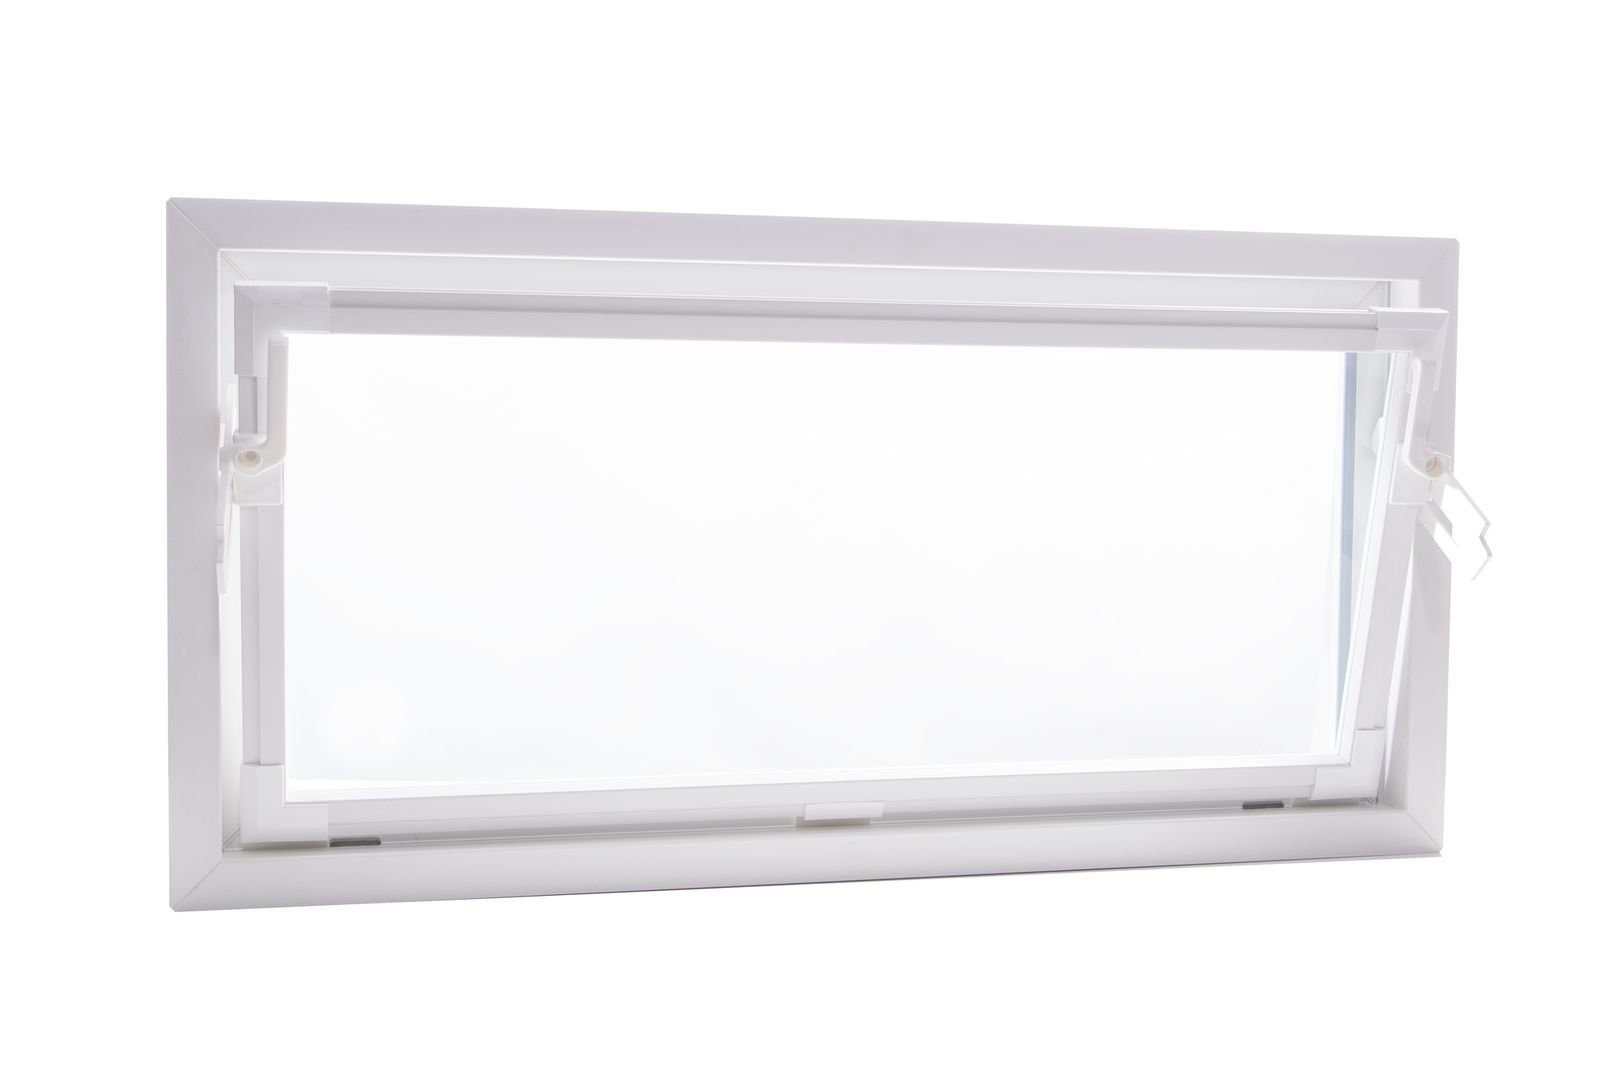 ACO Severin Ahlmann GmbH & Co. KG Kellerfenster ACO 90x60cm Einfachglas Nebenraumfenster Kippfenster Fenster weiß Kellerfenster, wärmeisolierende Kunststoff-Hohlkammerprofile